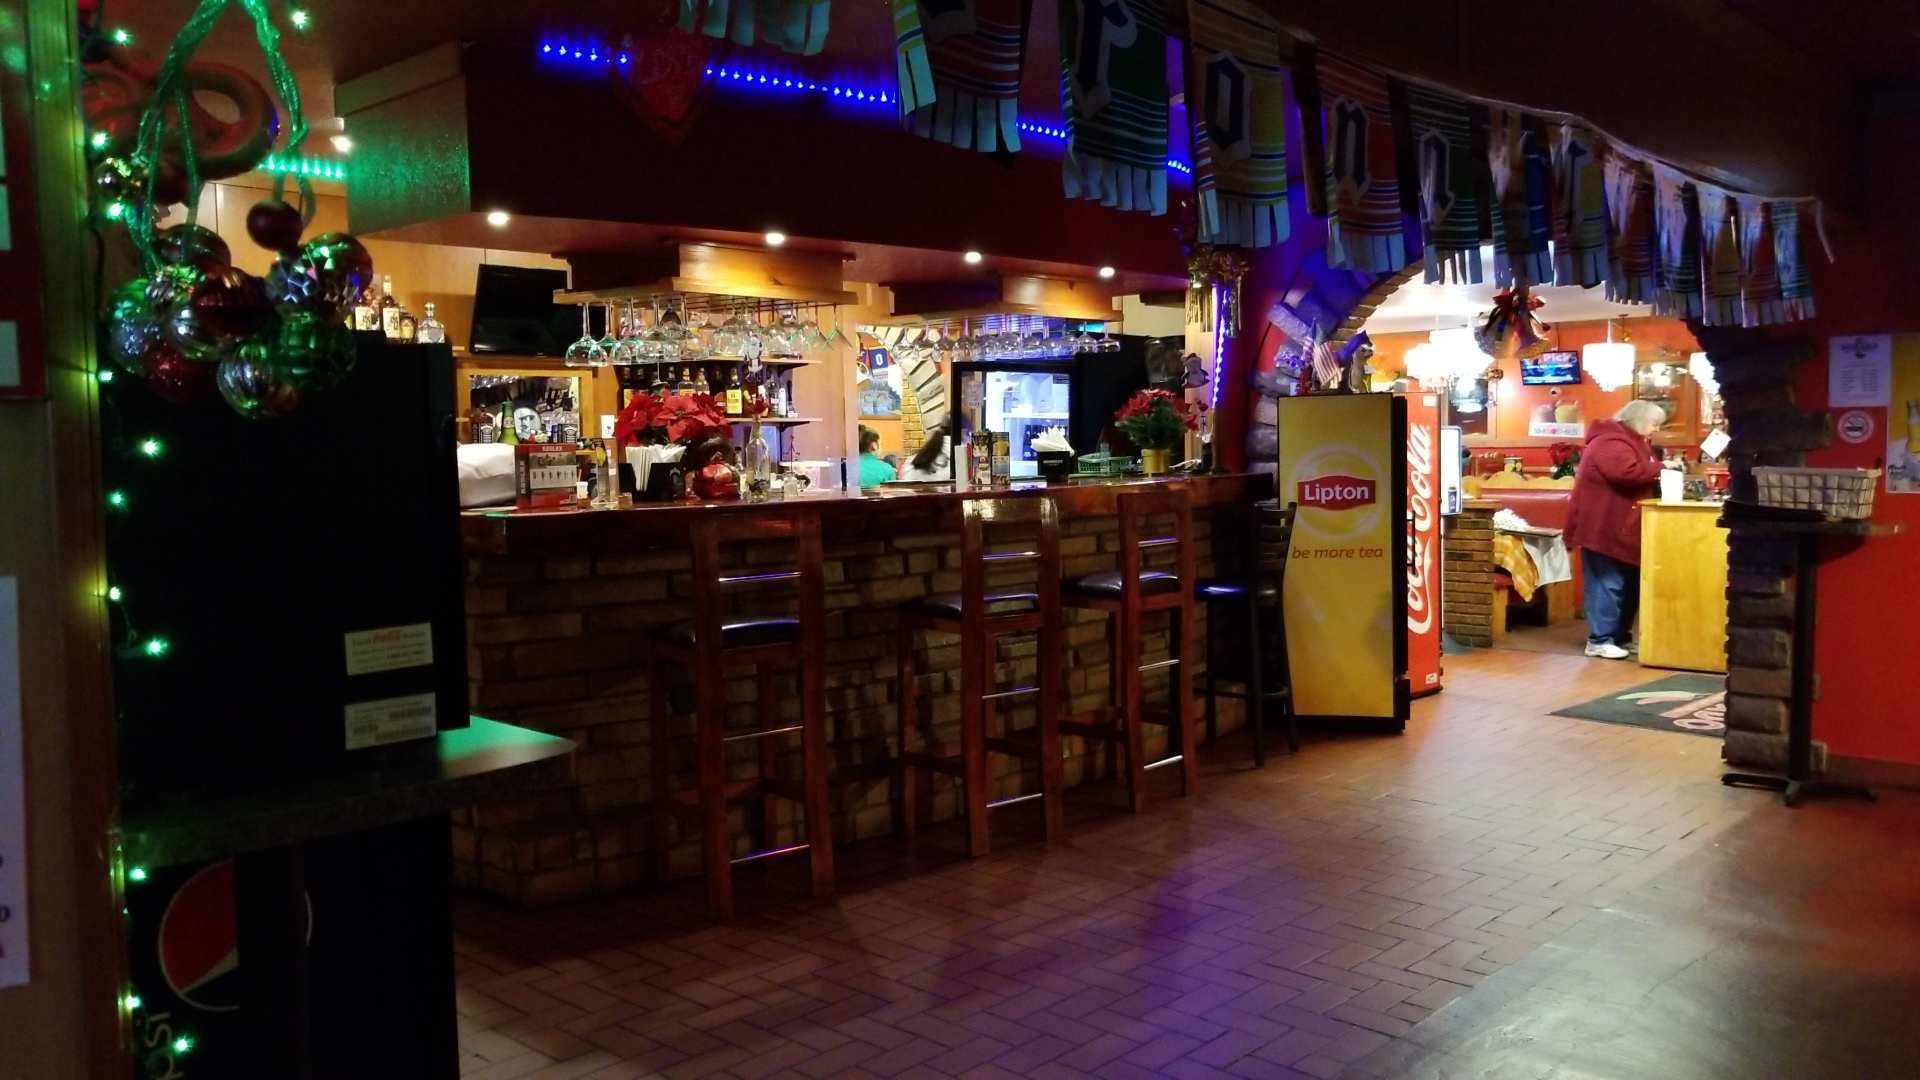 El Dorado Restaurant and Bar